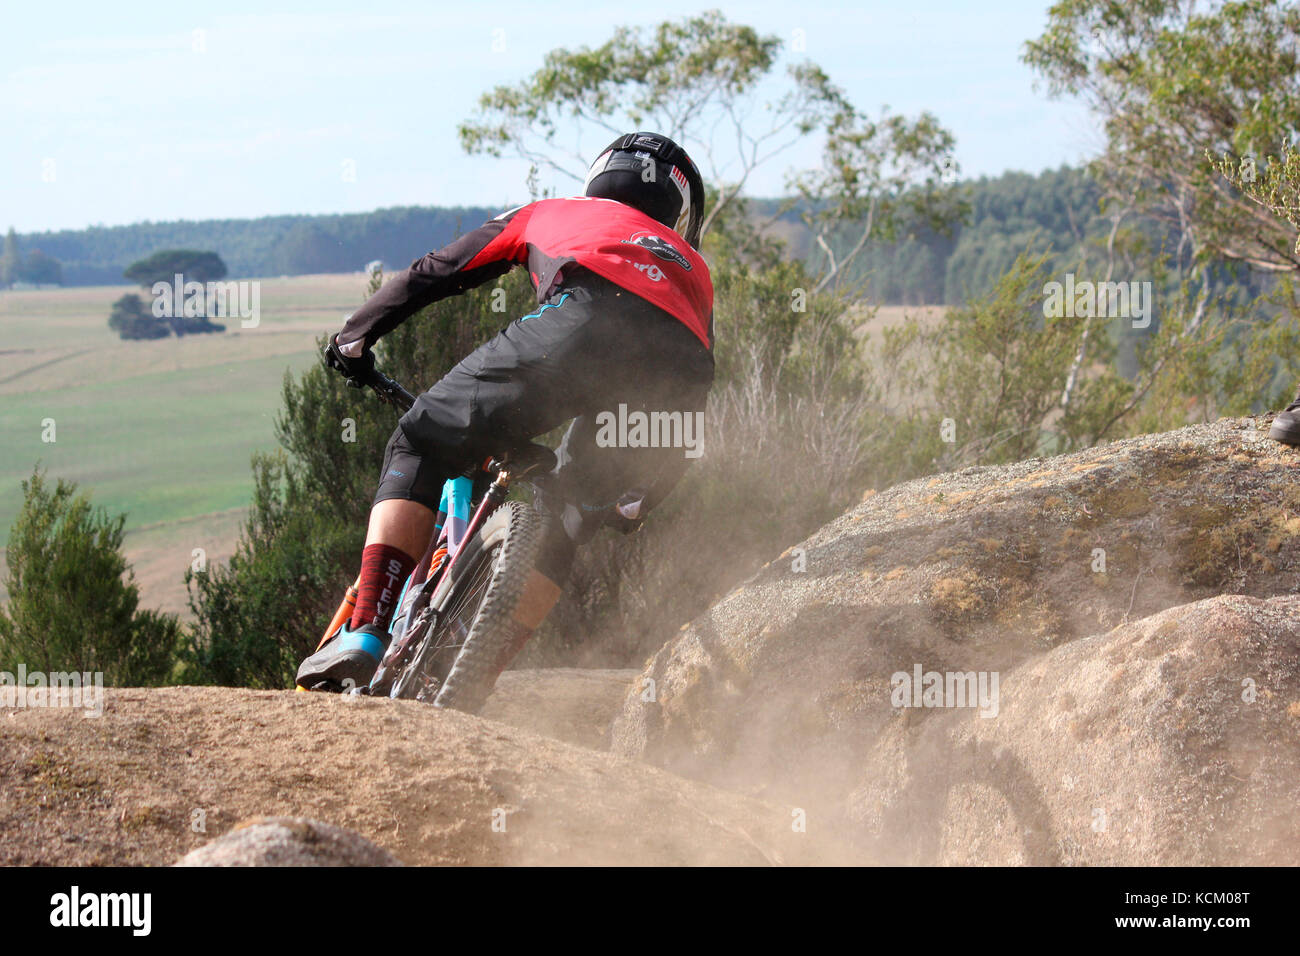 Competitor in Round 2 of the Enduro World Series mountain bike race on a Blue Derby track. Tasmania, Australia Stock Photo